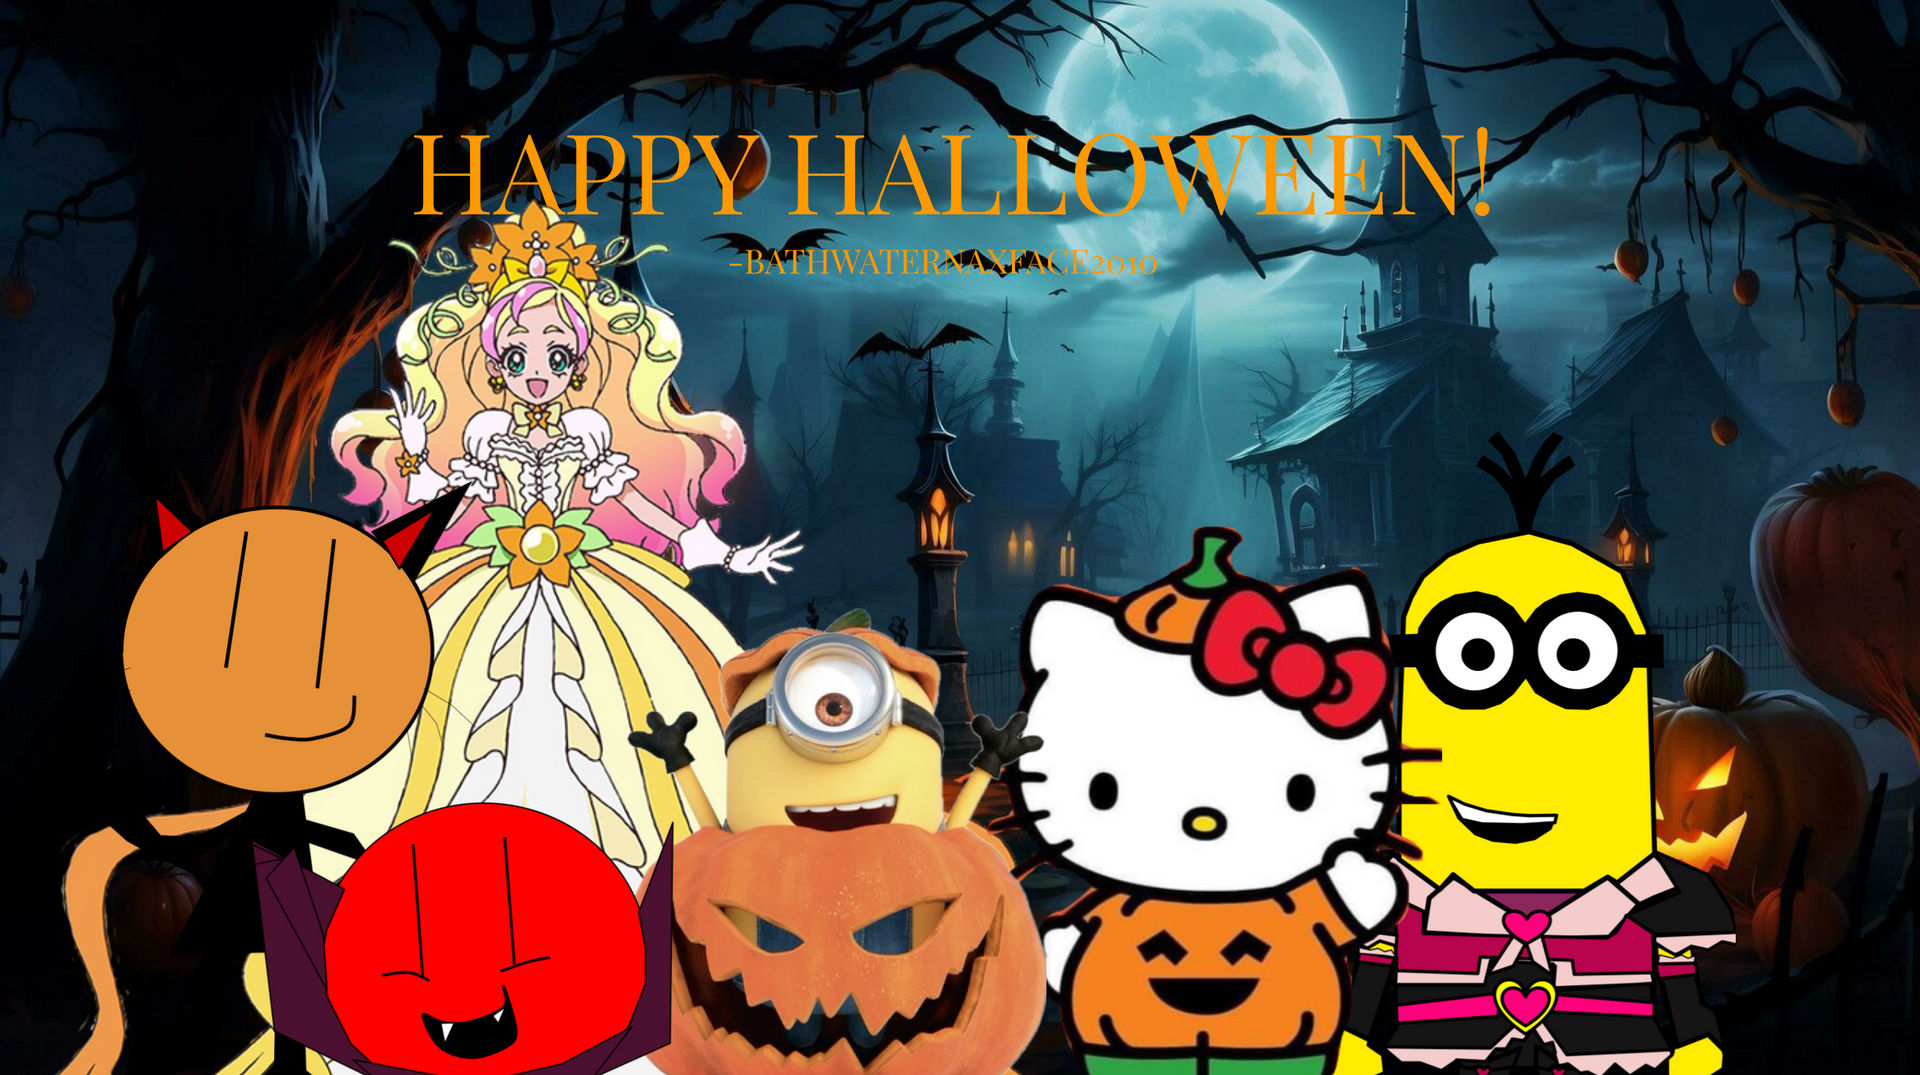 Happy Hauntings - Halloween 2010 - DFO World Wiki